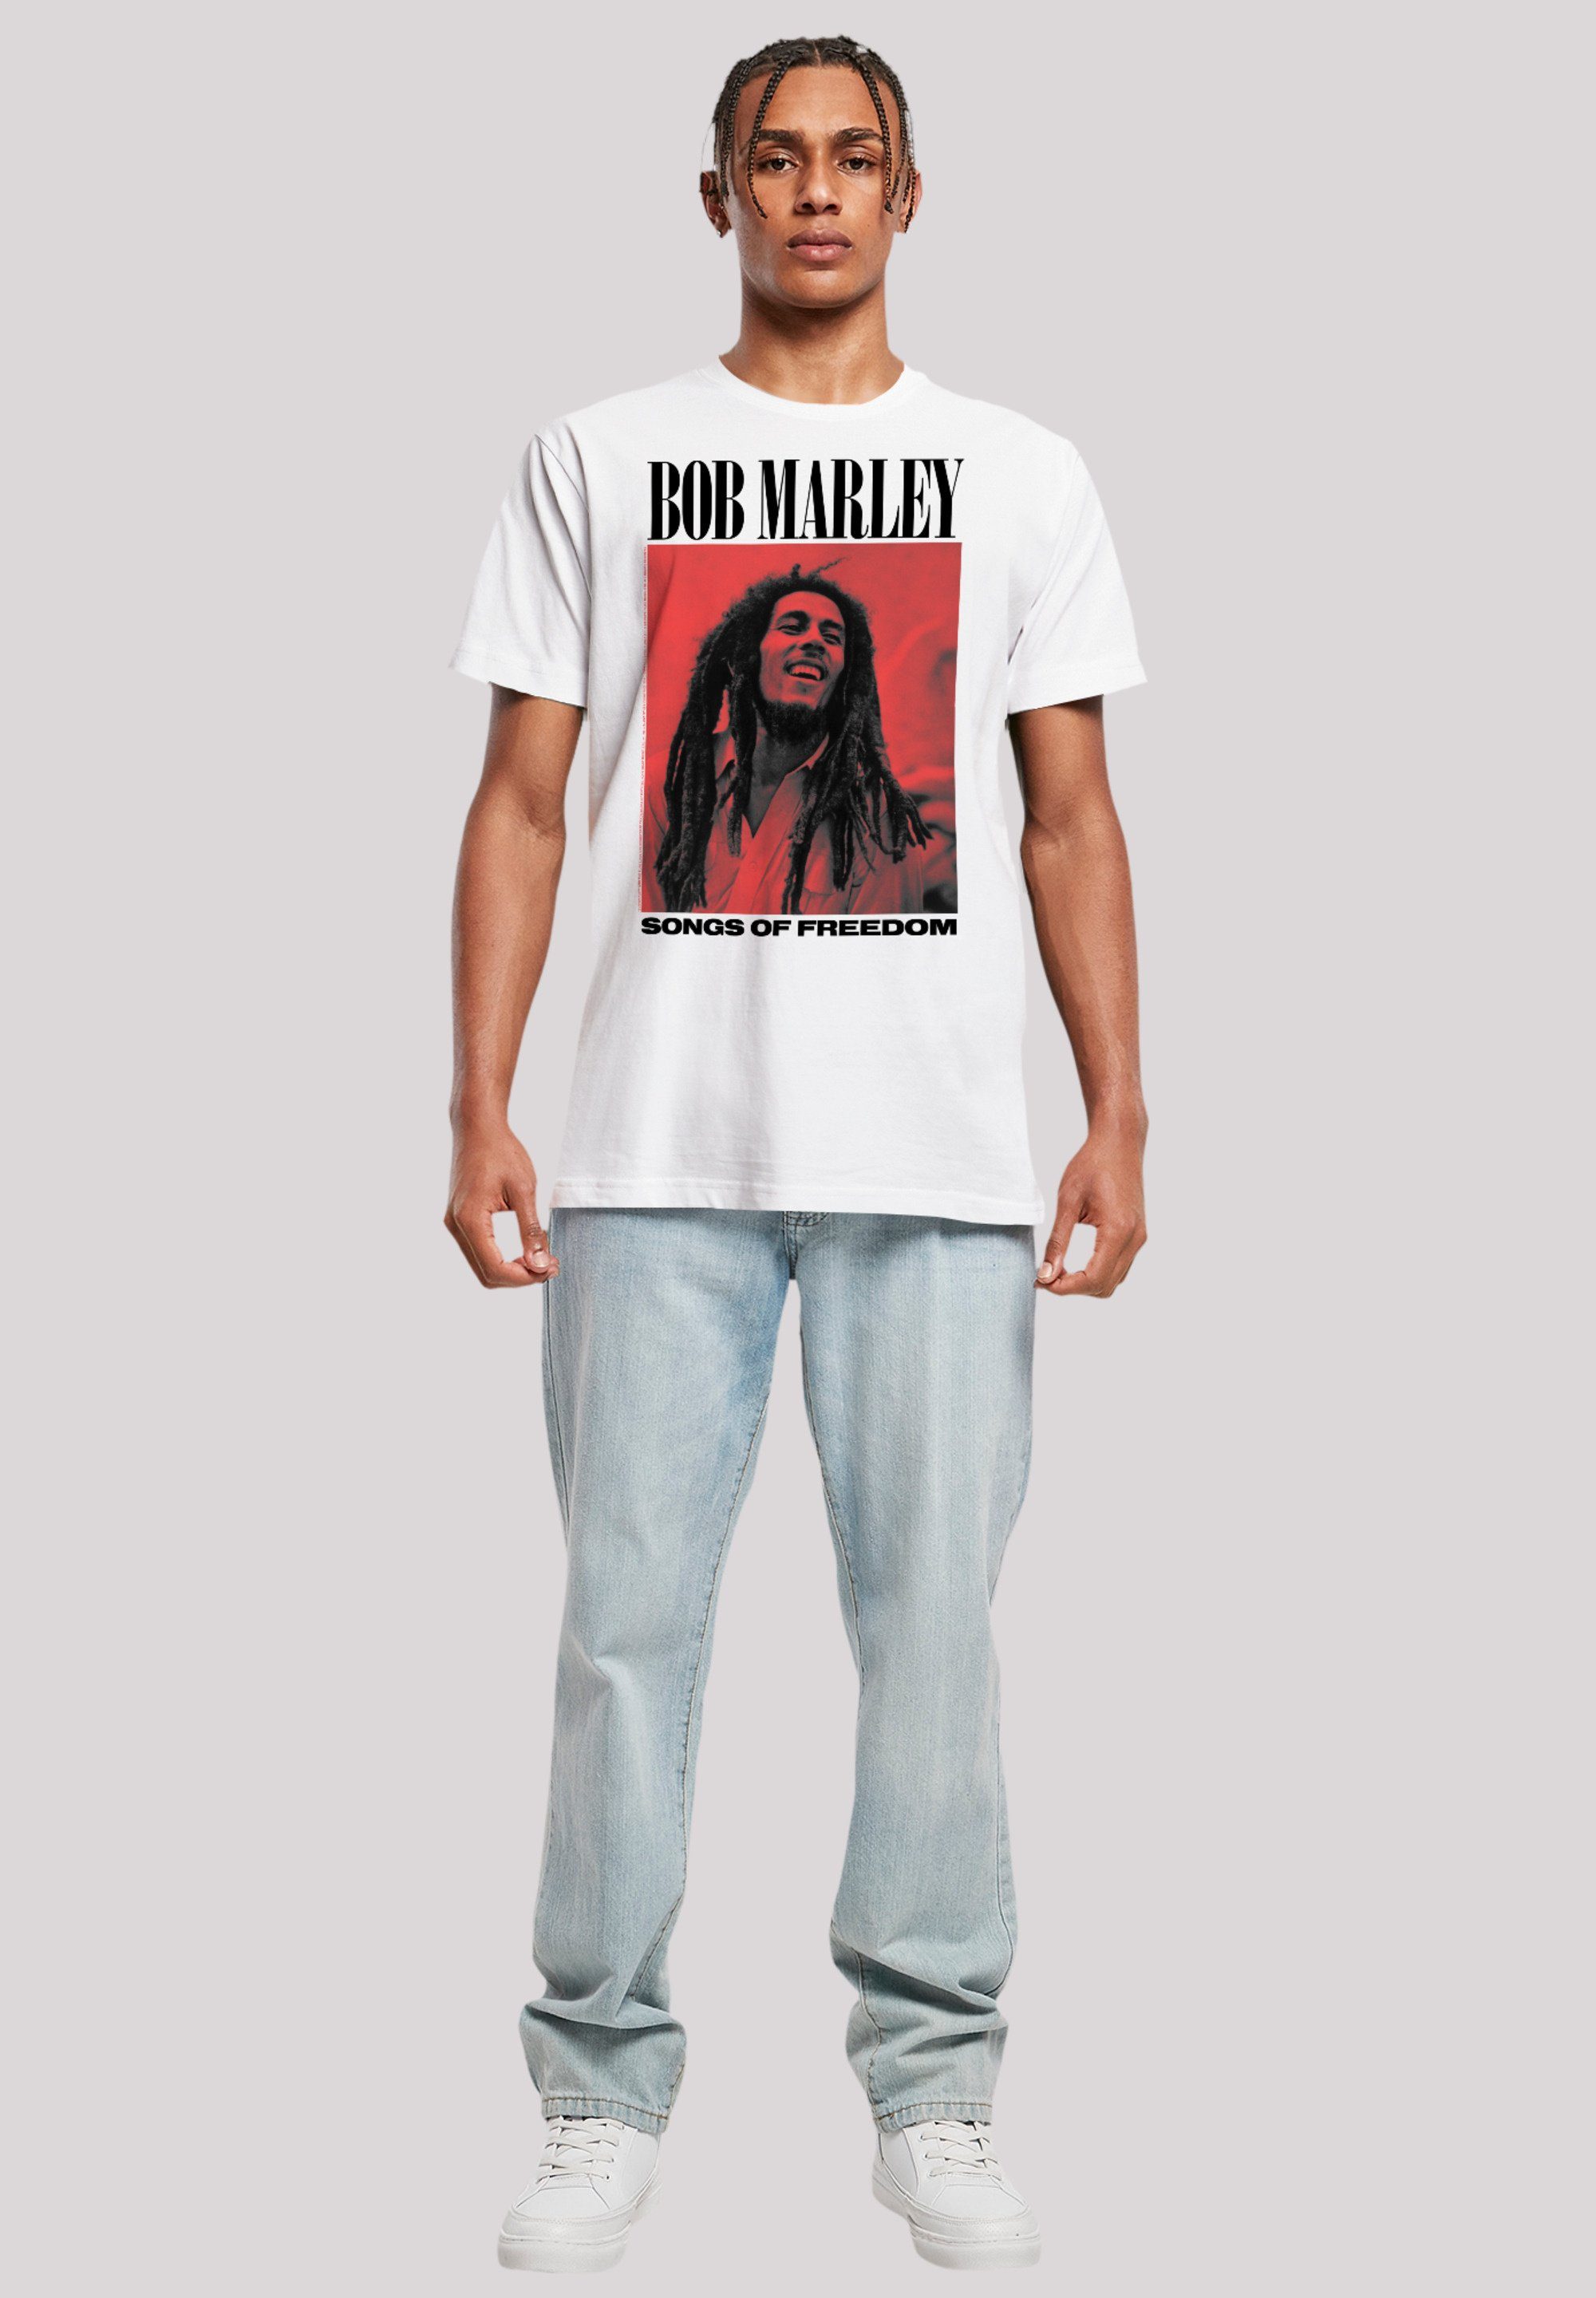 Marley Of Music Rock F4NT4STIC Musik, Premium Reggae Off By Qualität, Bob weiß T-Shirt Songs Freedom